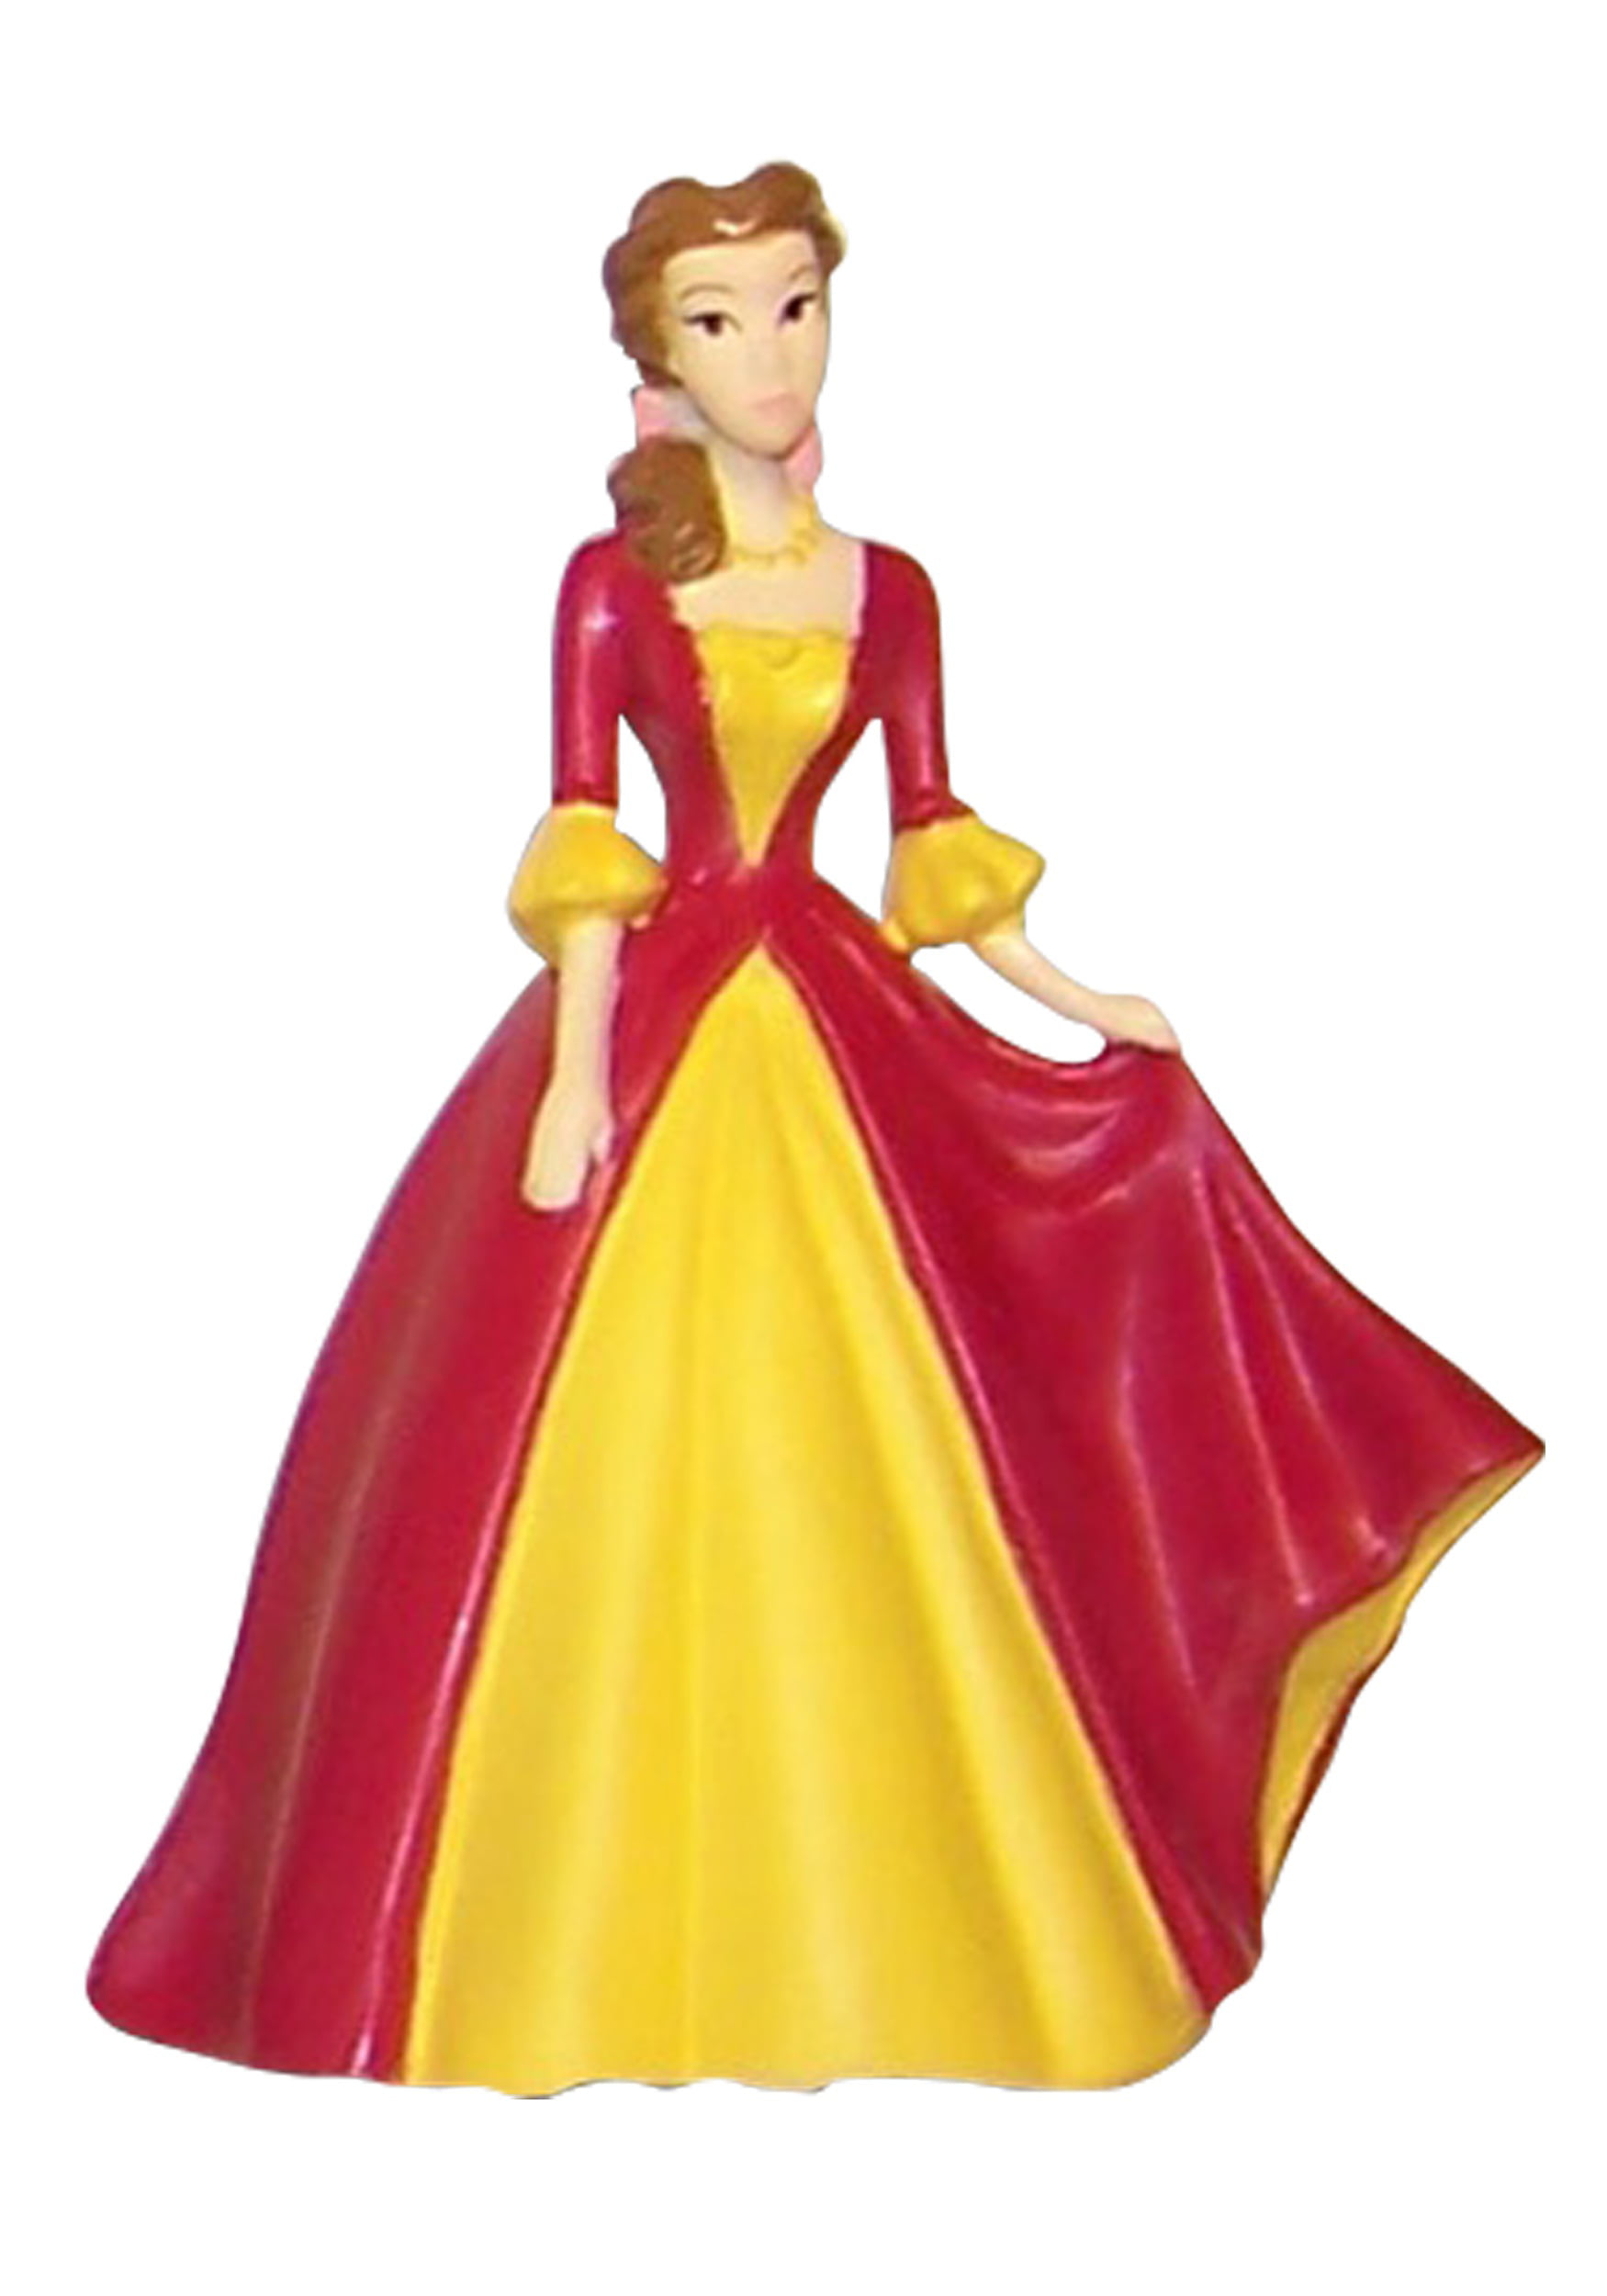 princess belle red dress